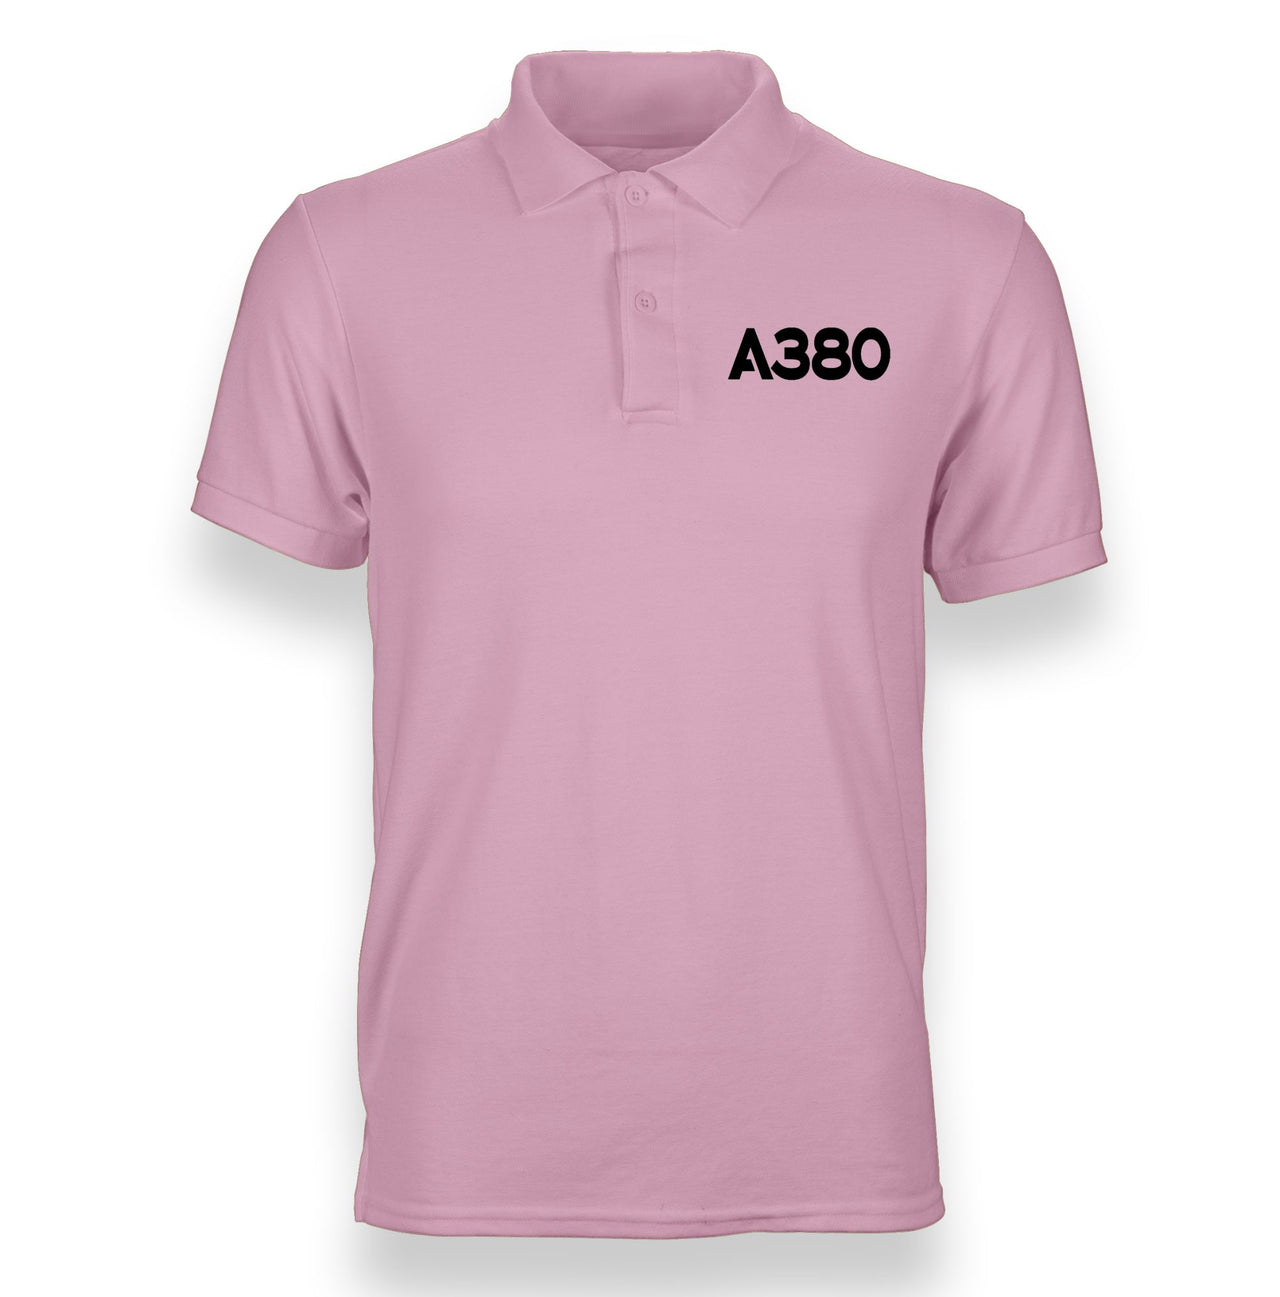 A380 Flat Text Designed "WOMEN" Polo T-Shirts